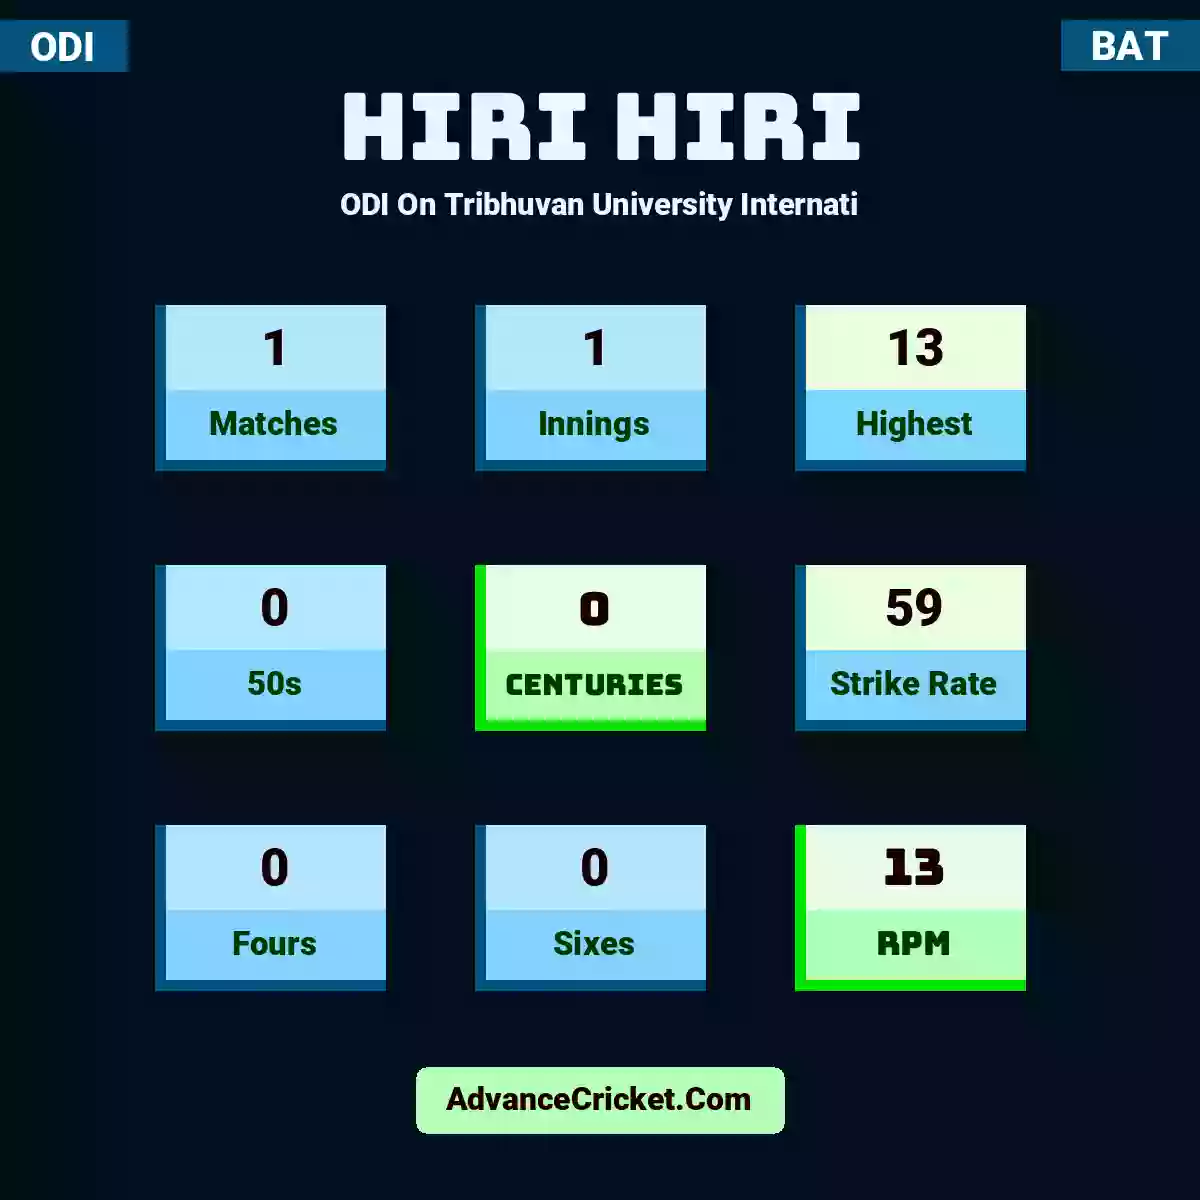 Hiri Hiri ODI  On Tribhuvan University Internati, Hiri Hiri played 1 matches, scored 13 runs as highest, 0 half-centuries, and 0 centuries, with a strike rate of 59. H.Hiri hit 0 fours and 0 sixes, with an RPM of 13.